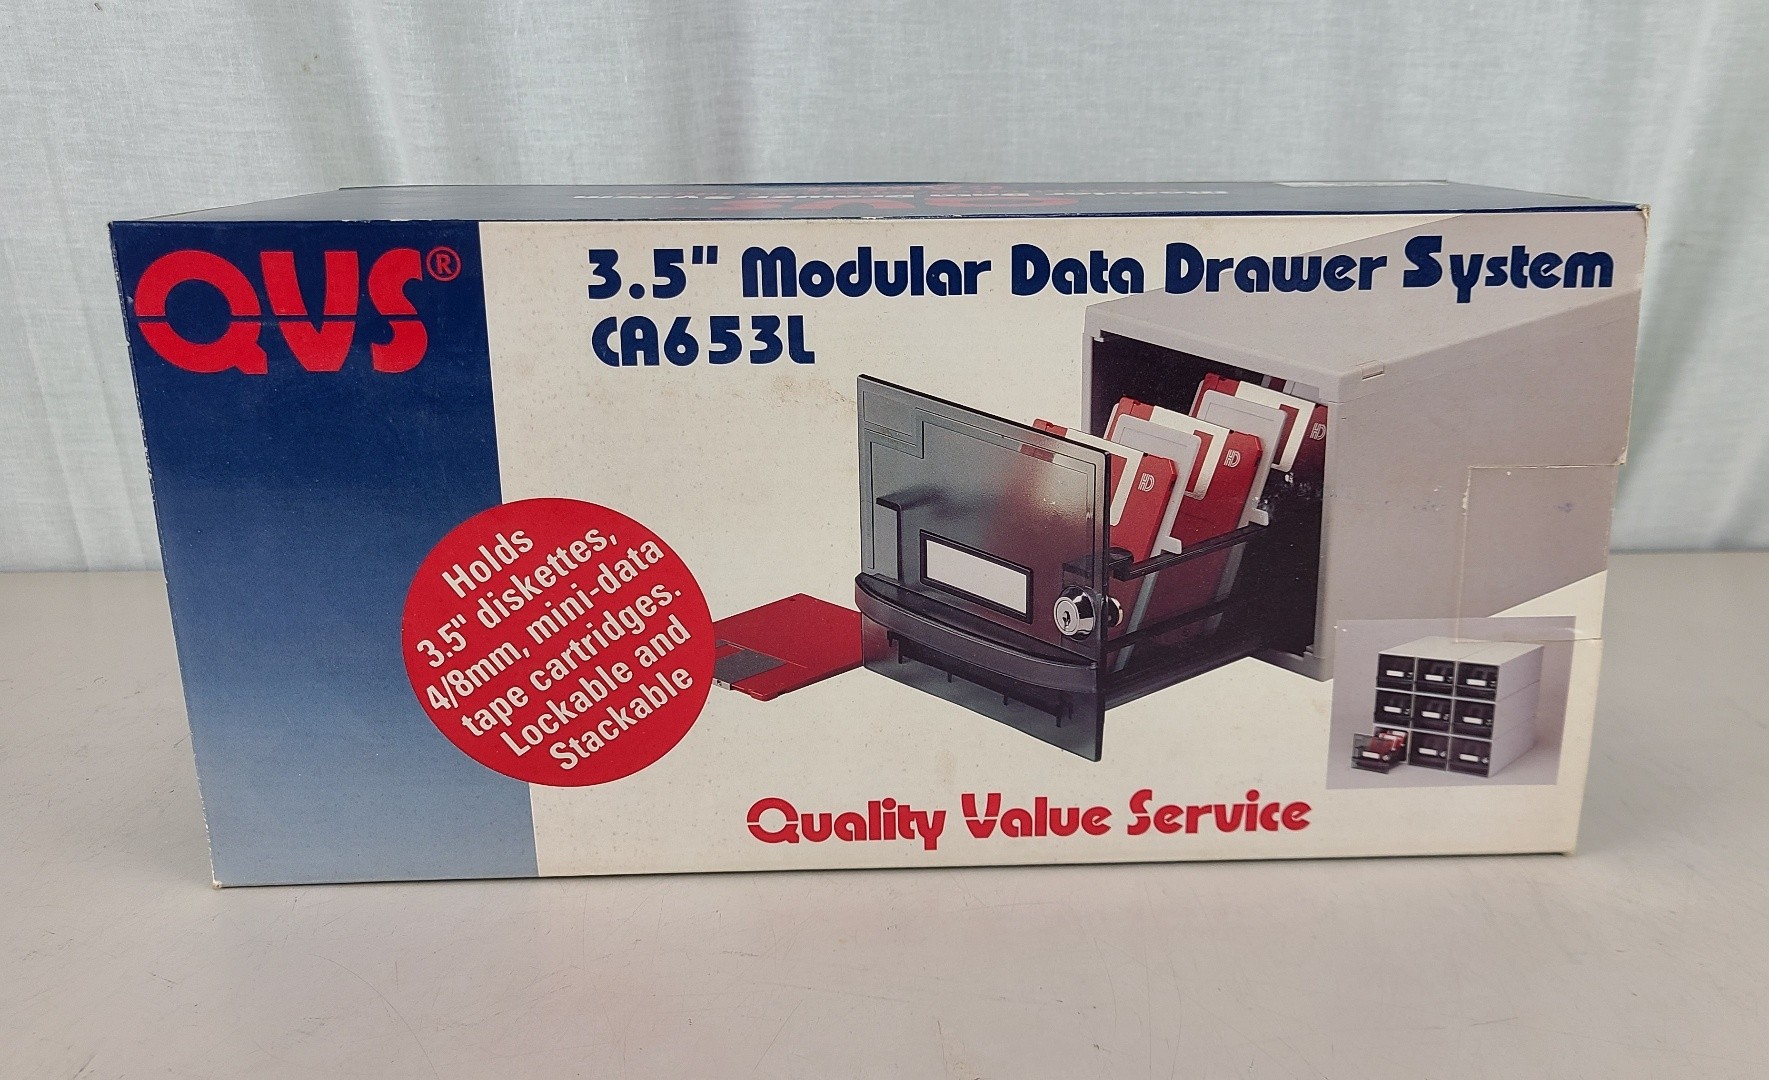 QVS 3.5" Modular Data Drawer System CA653L for 3.5" Diskettes